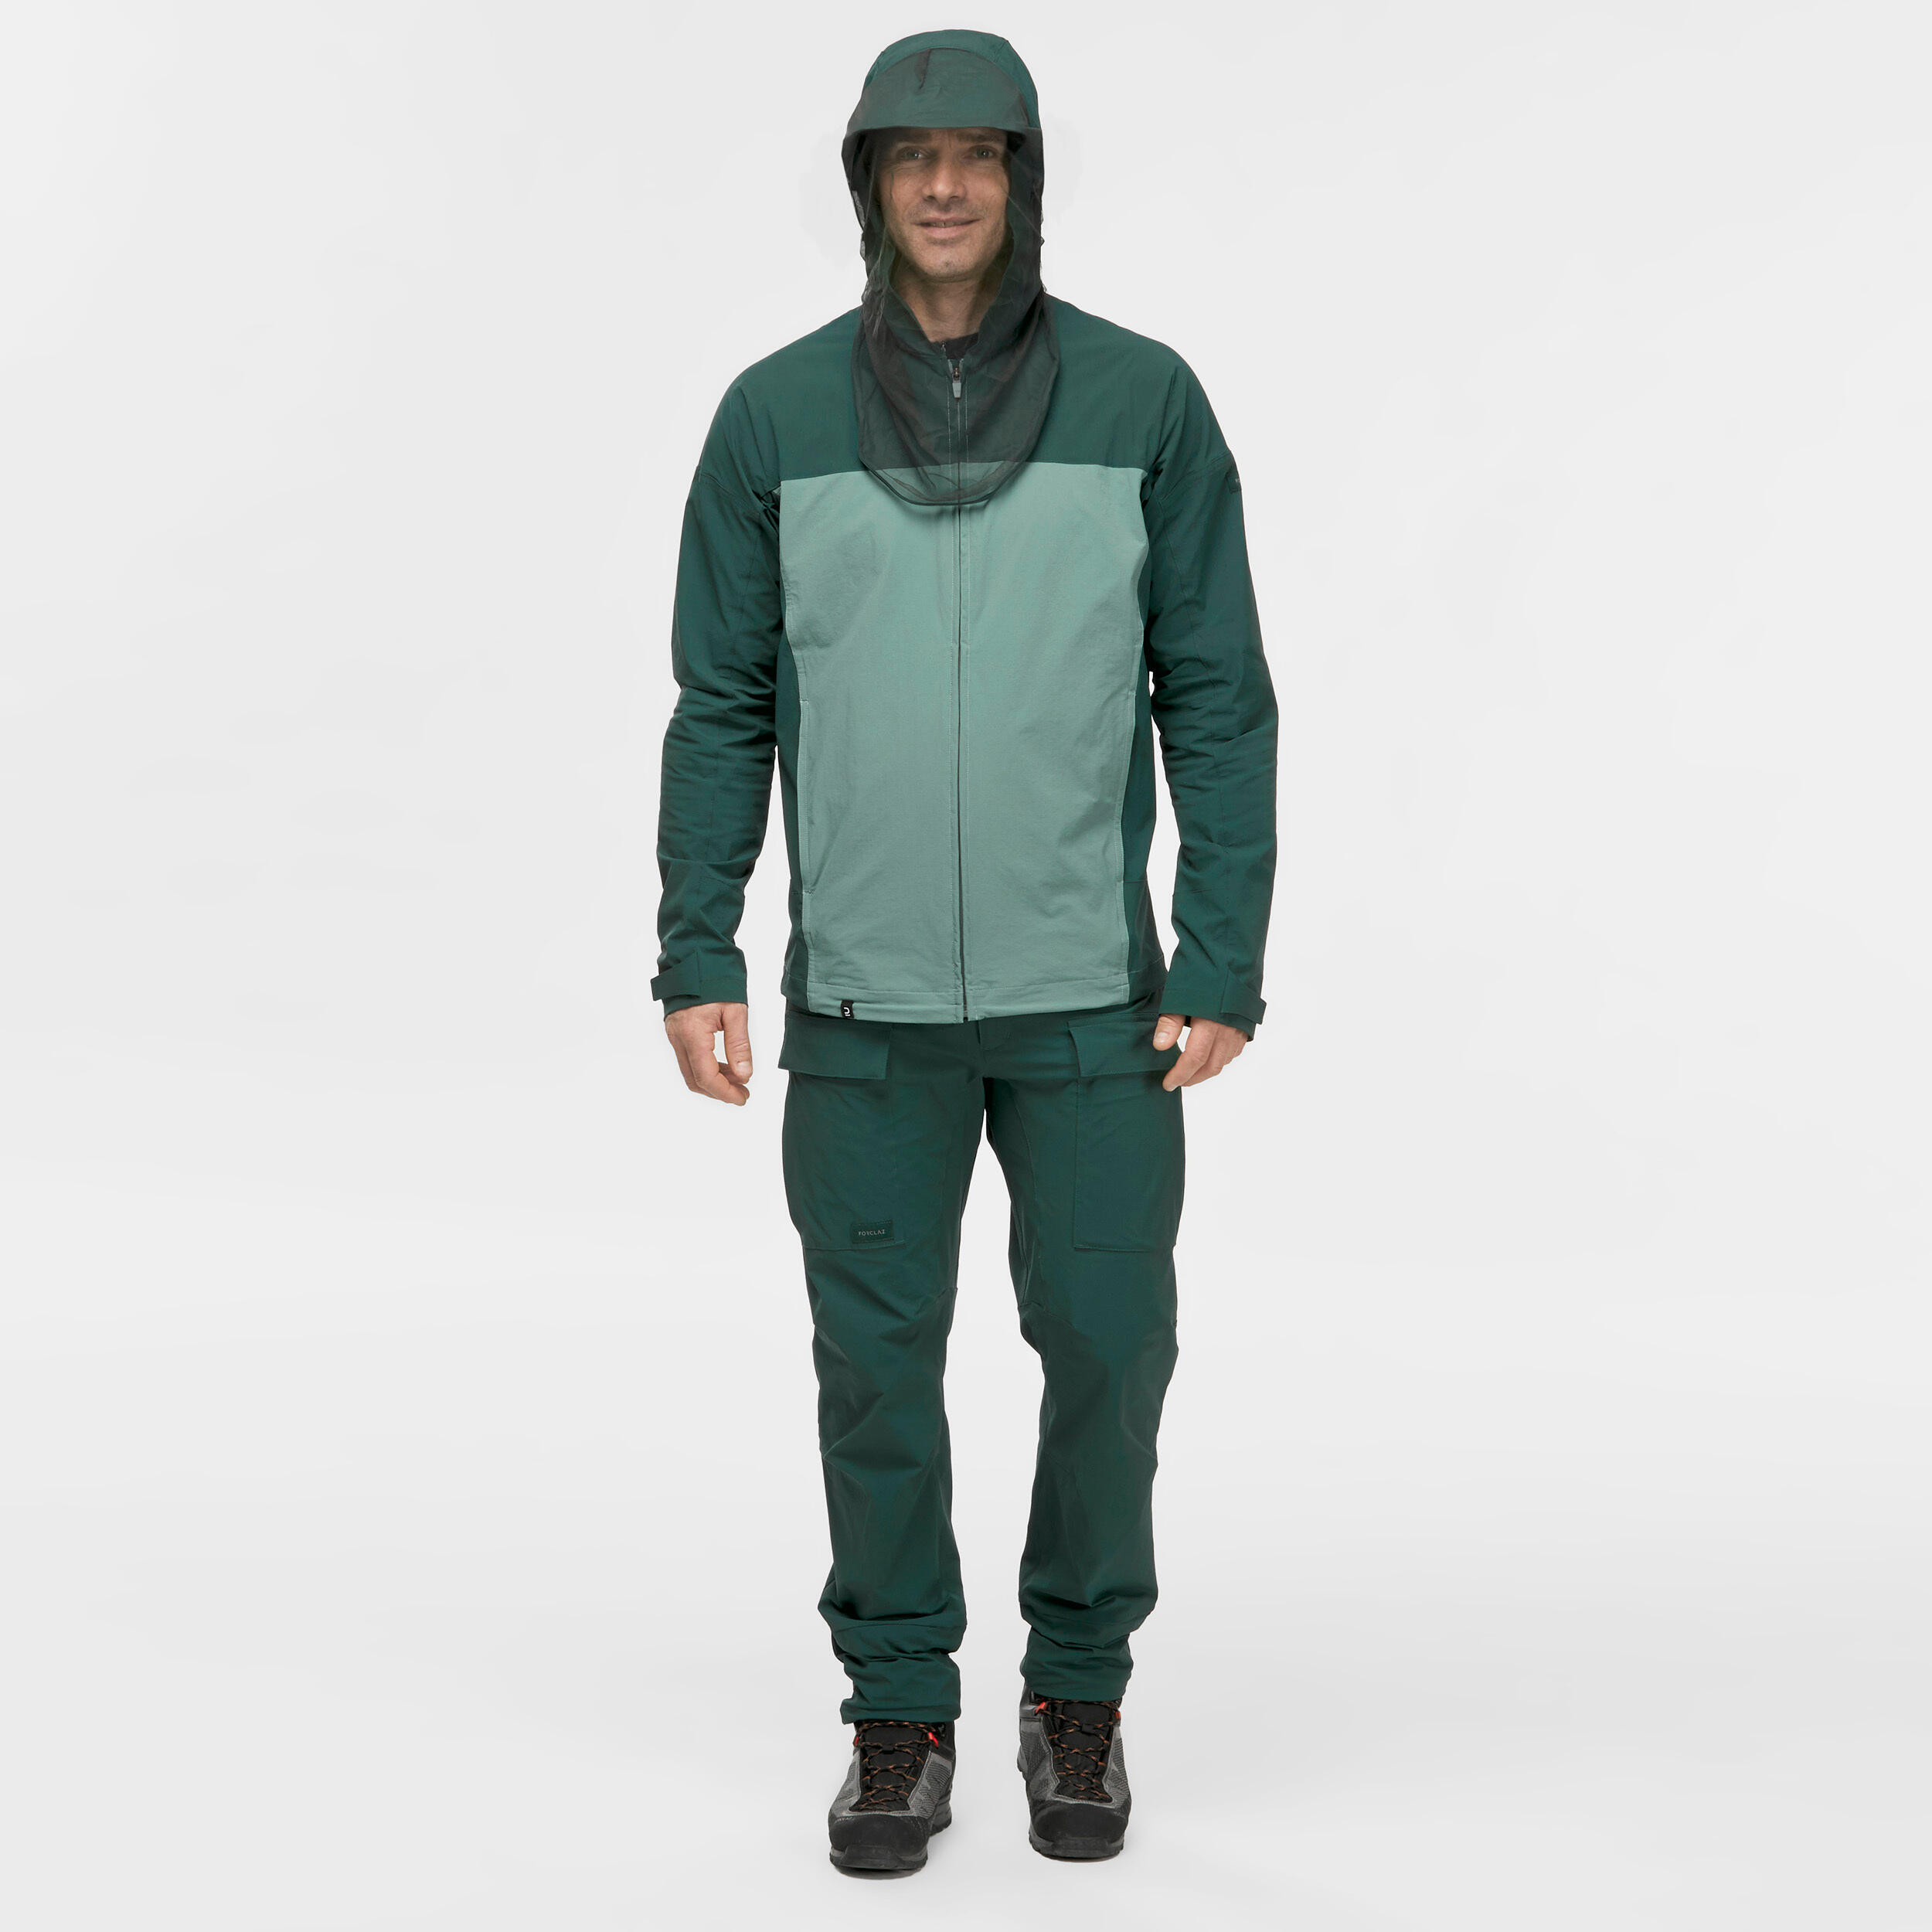 Unisex anti-mosquito jacket - Tropic 900 - Green 15/16